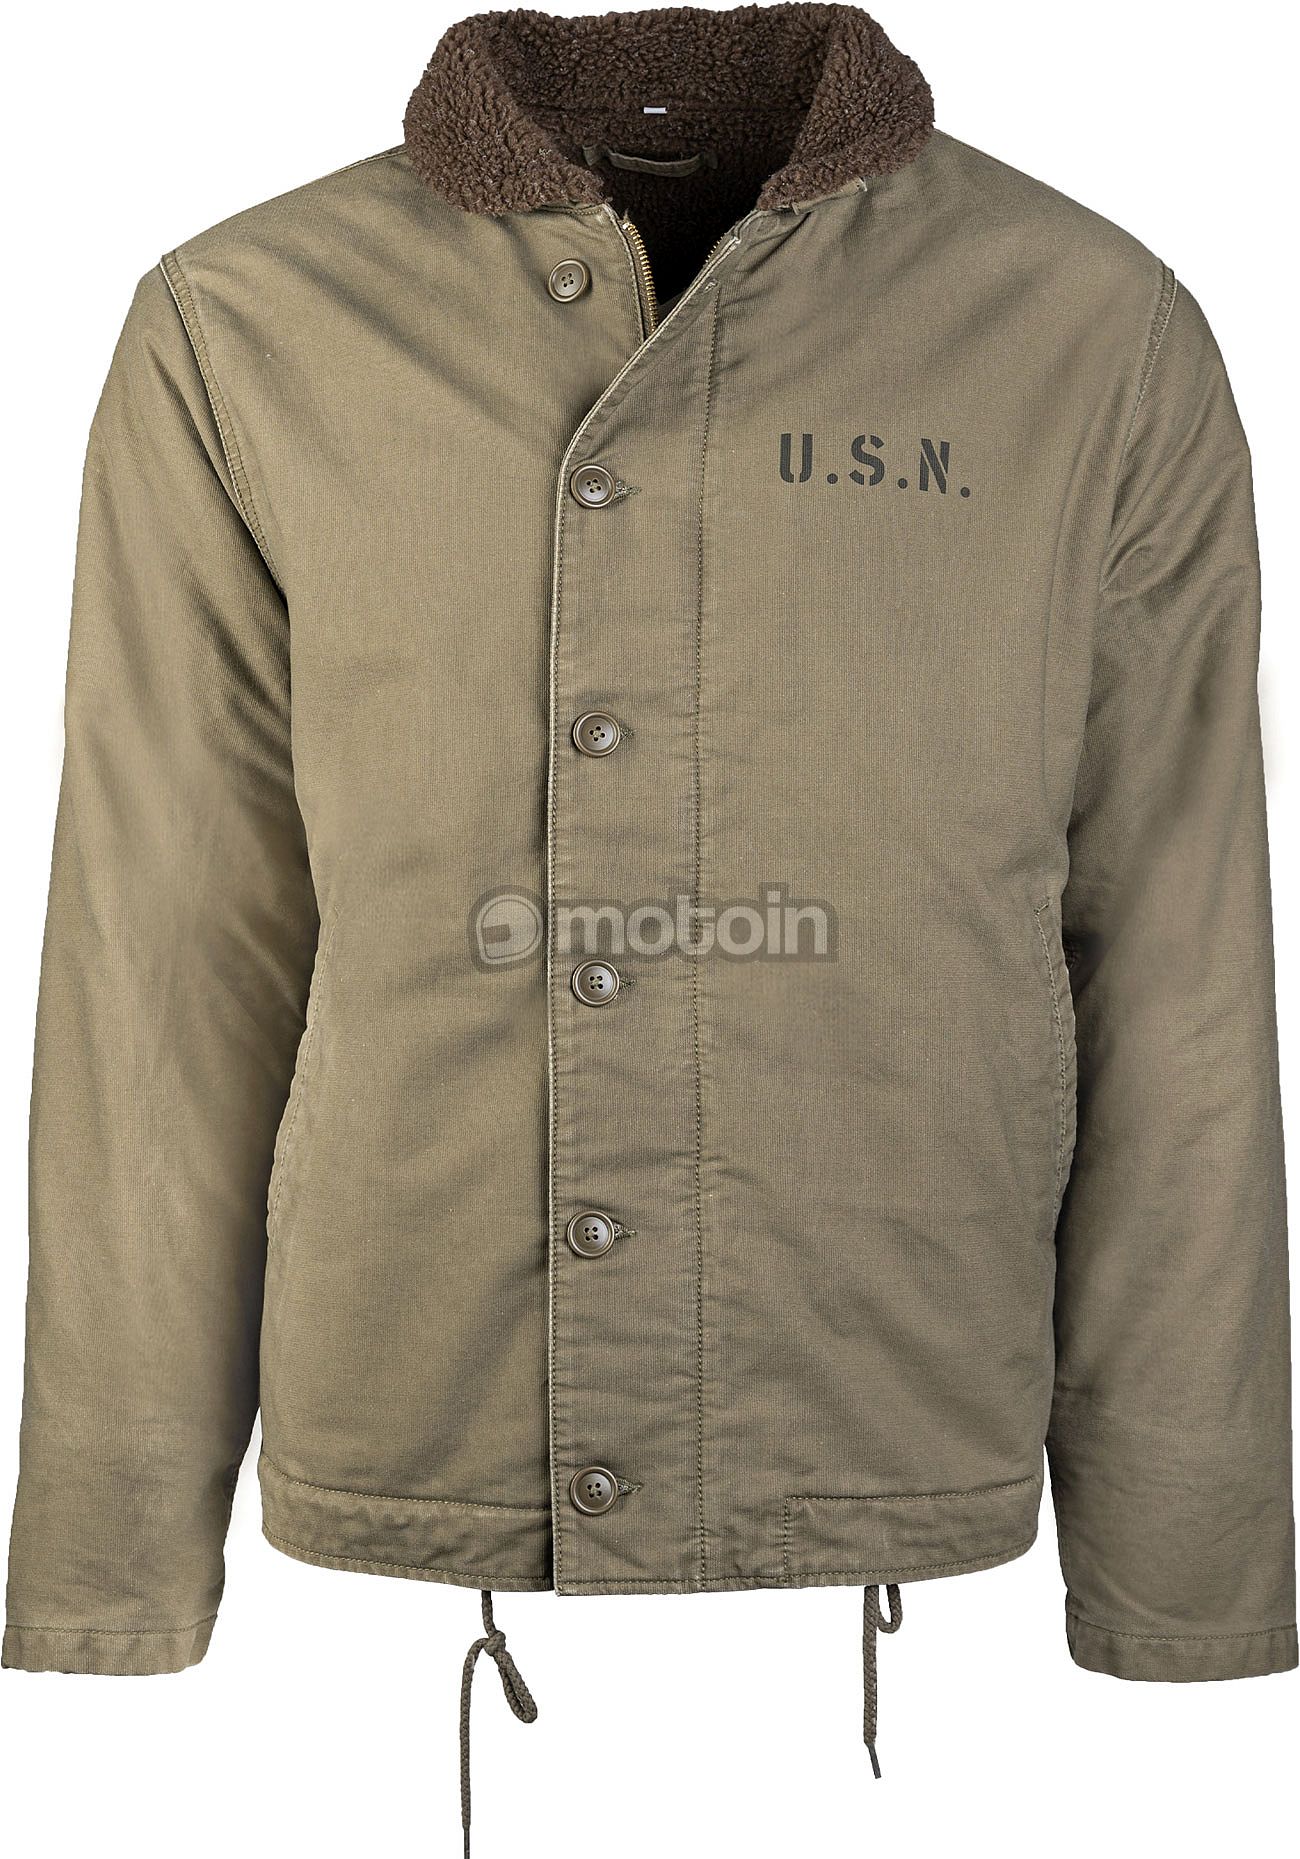 Mil-Tec US Navy Deck N-1, textile jacket | Beanies